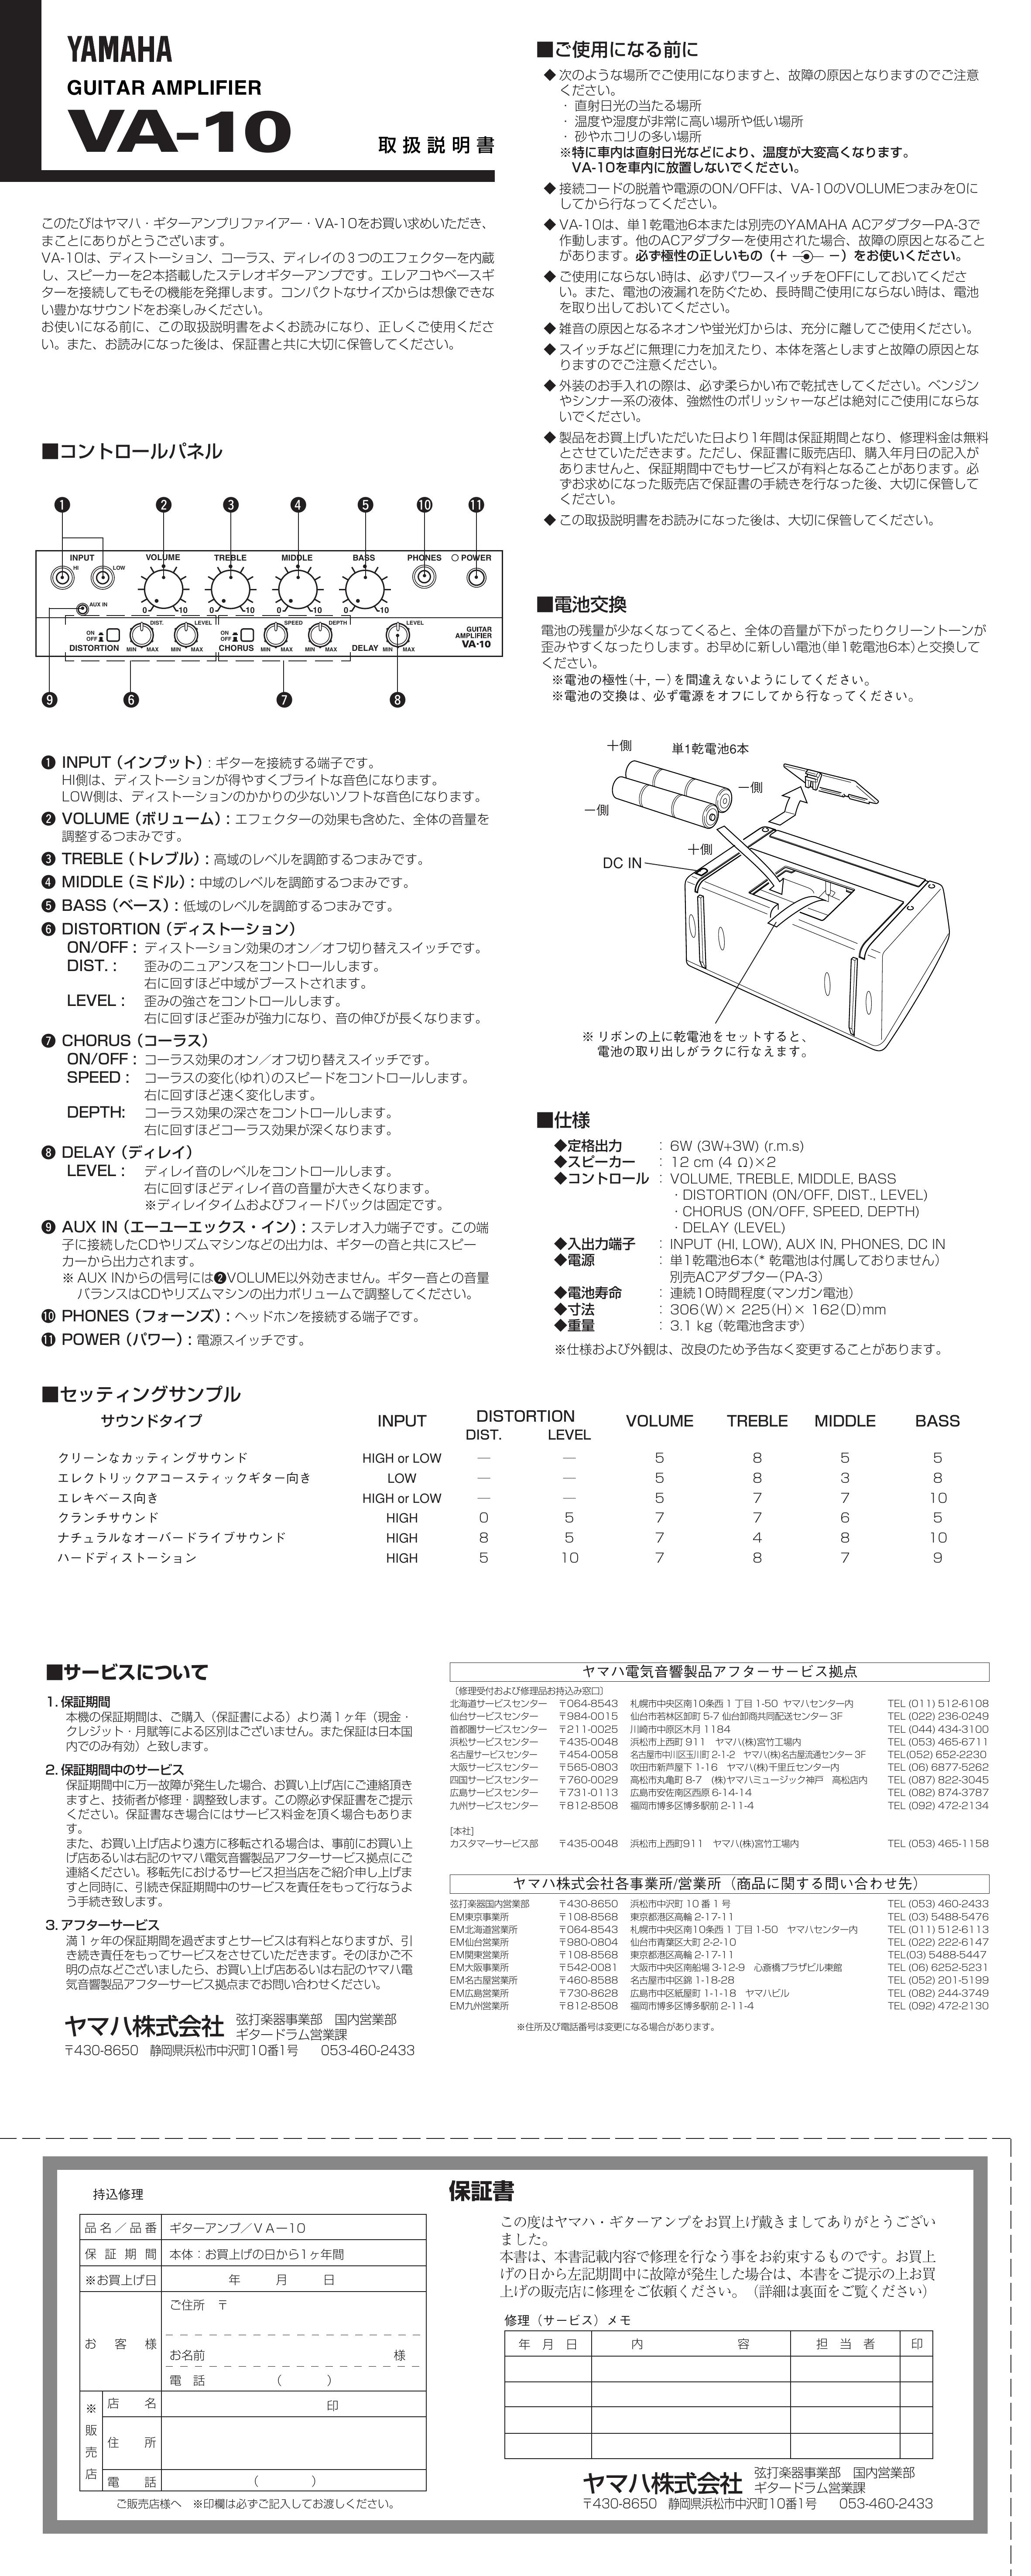 Yamaha VA-10 Musical Instrument Amplifier User Manual